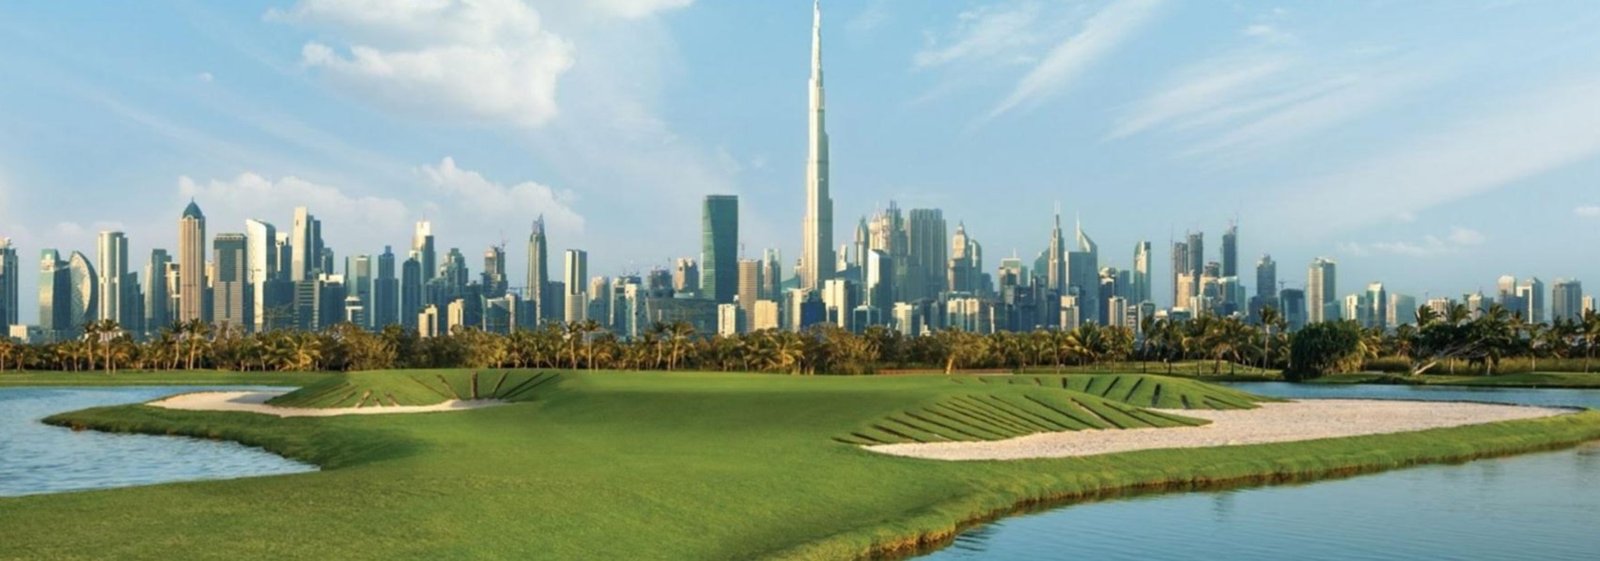 Dubai Hills estate